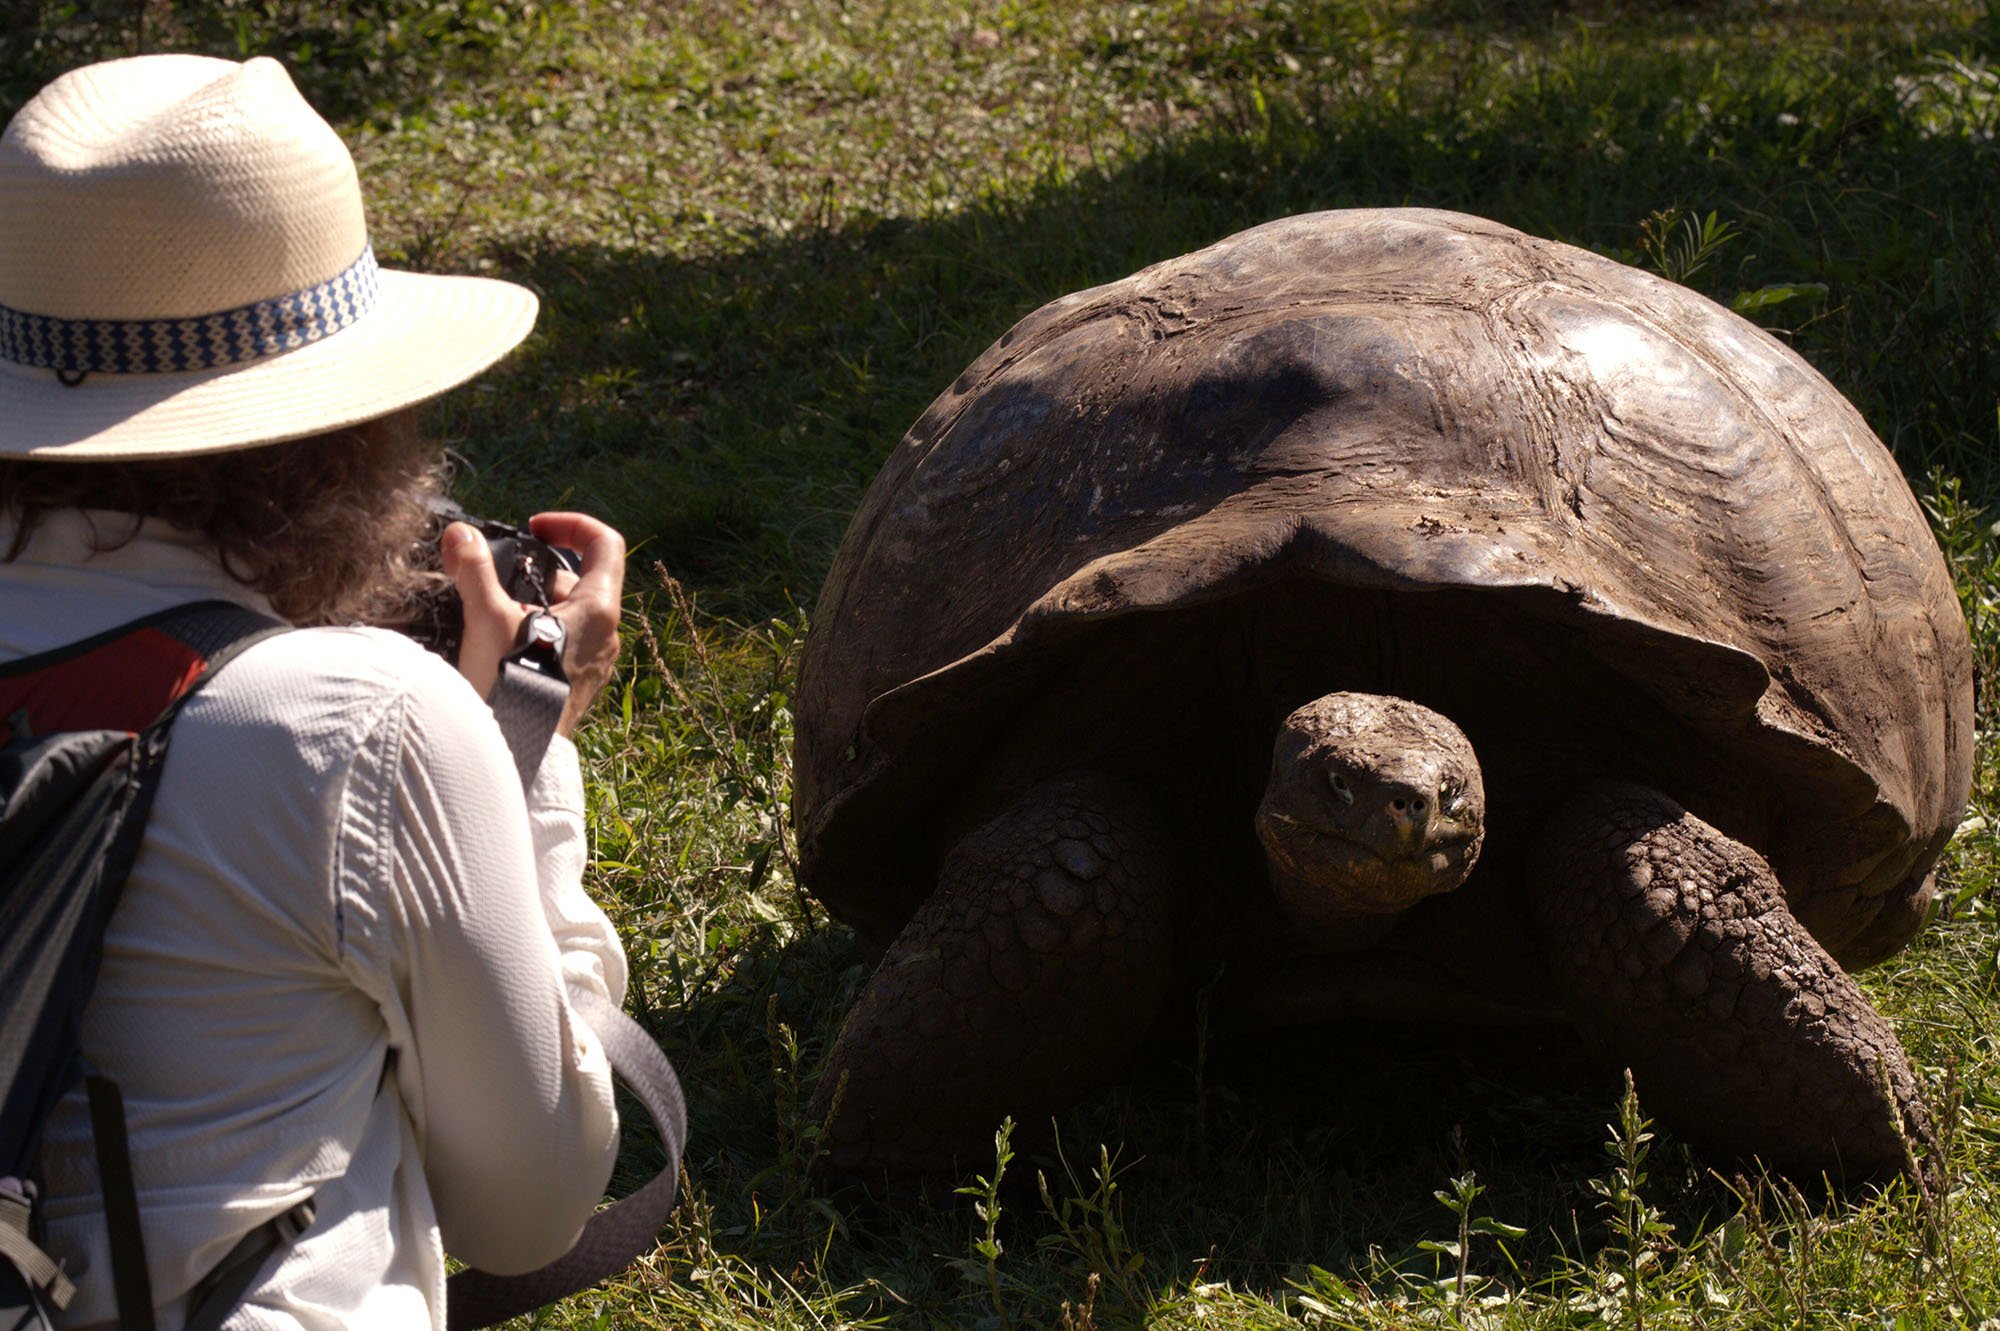 a tourist photographs a giant tortoise